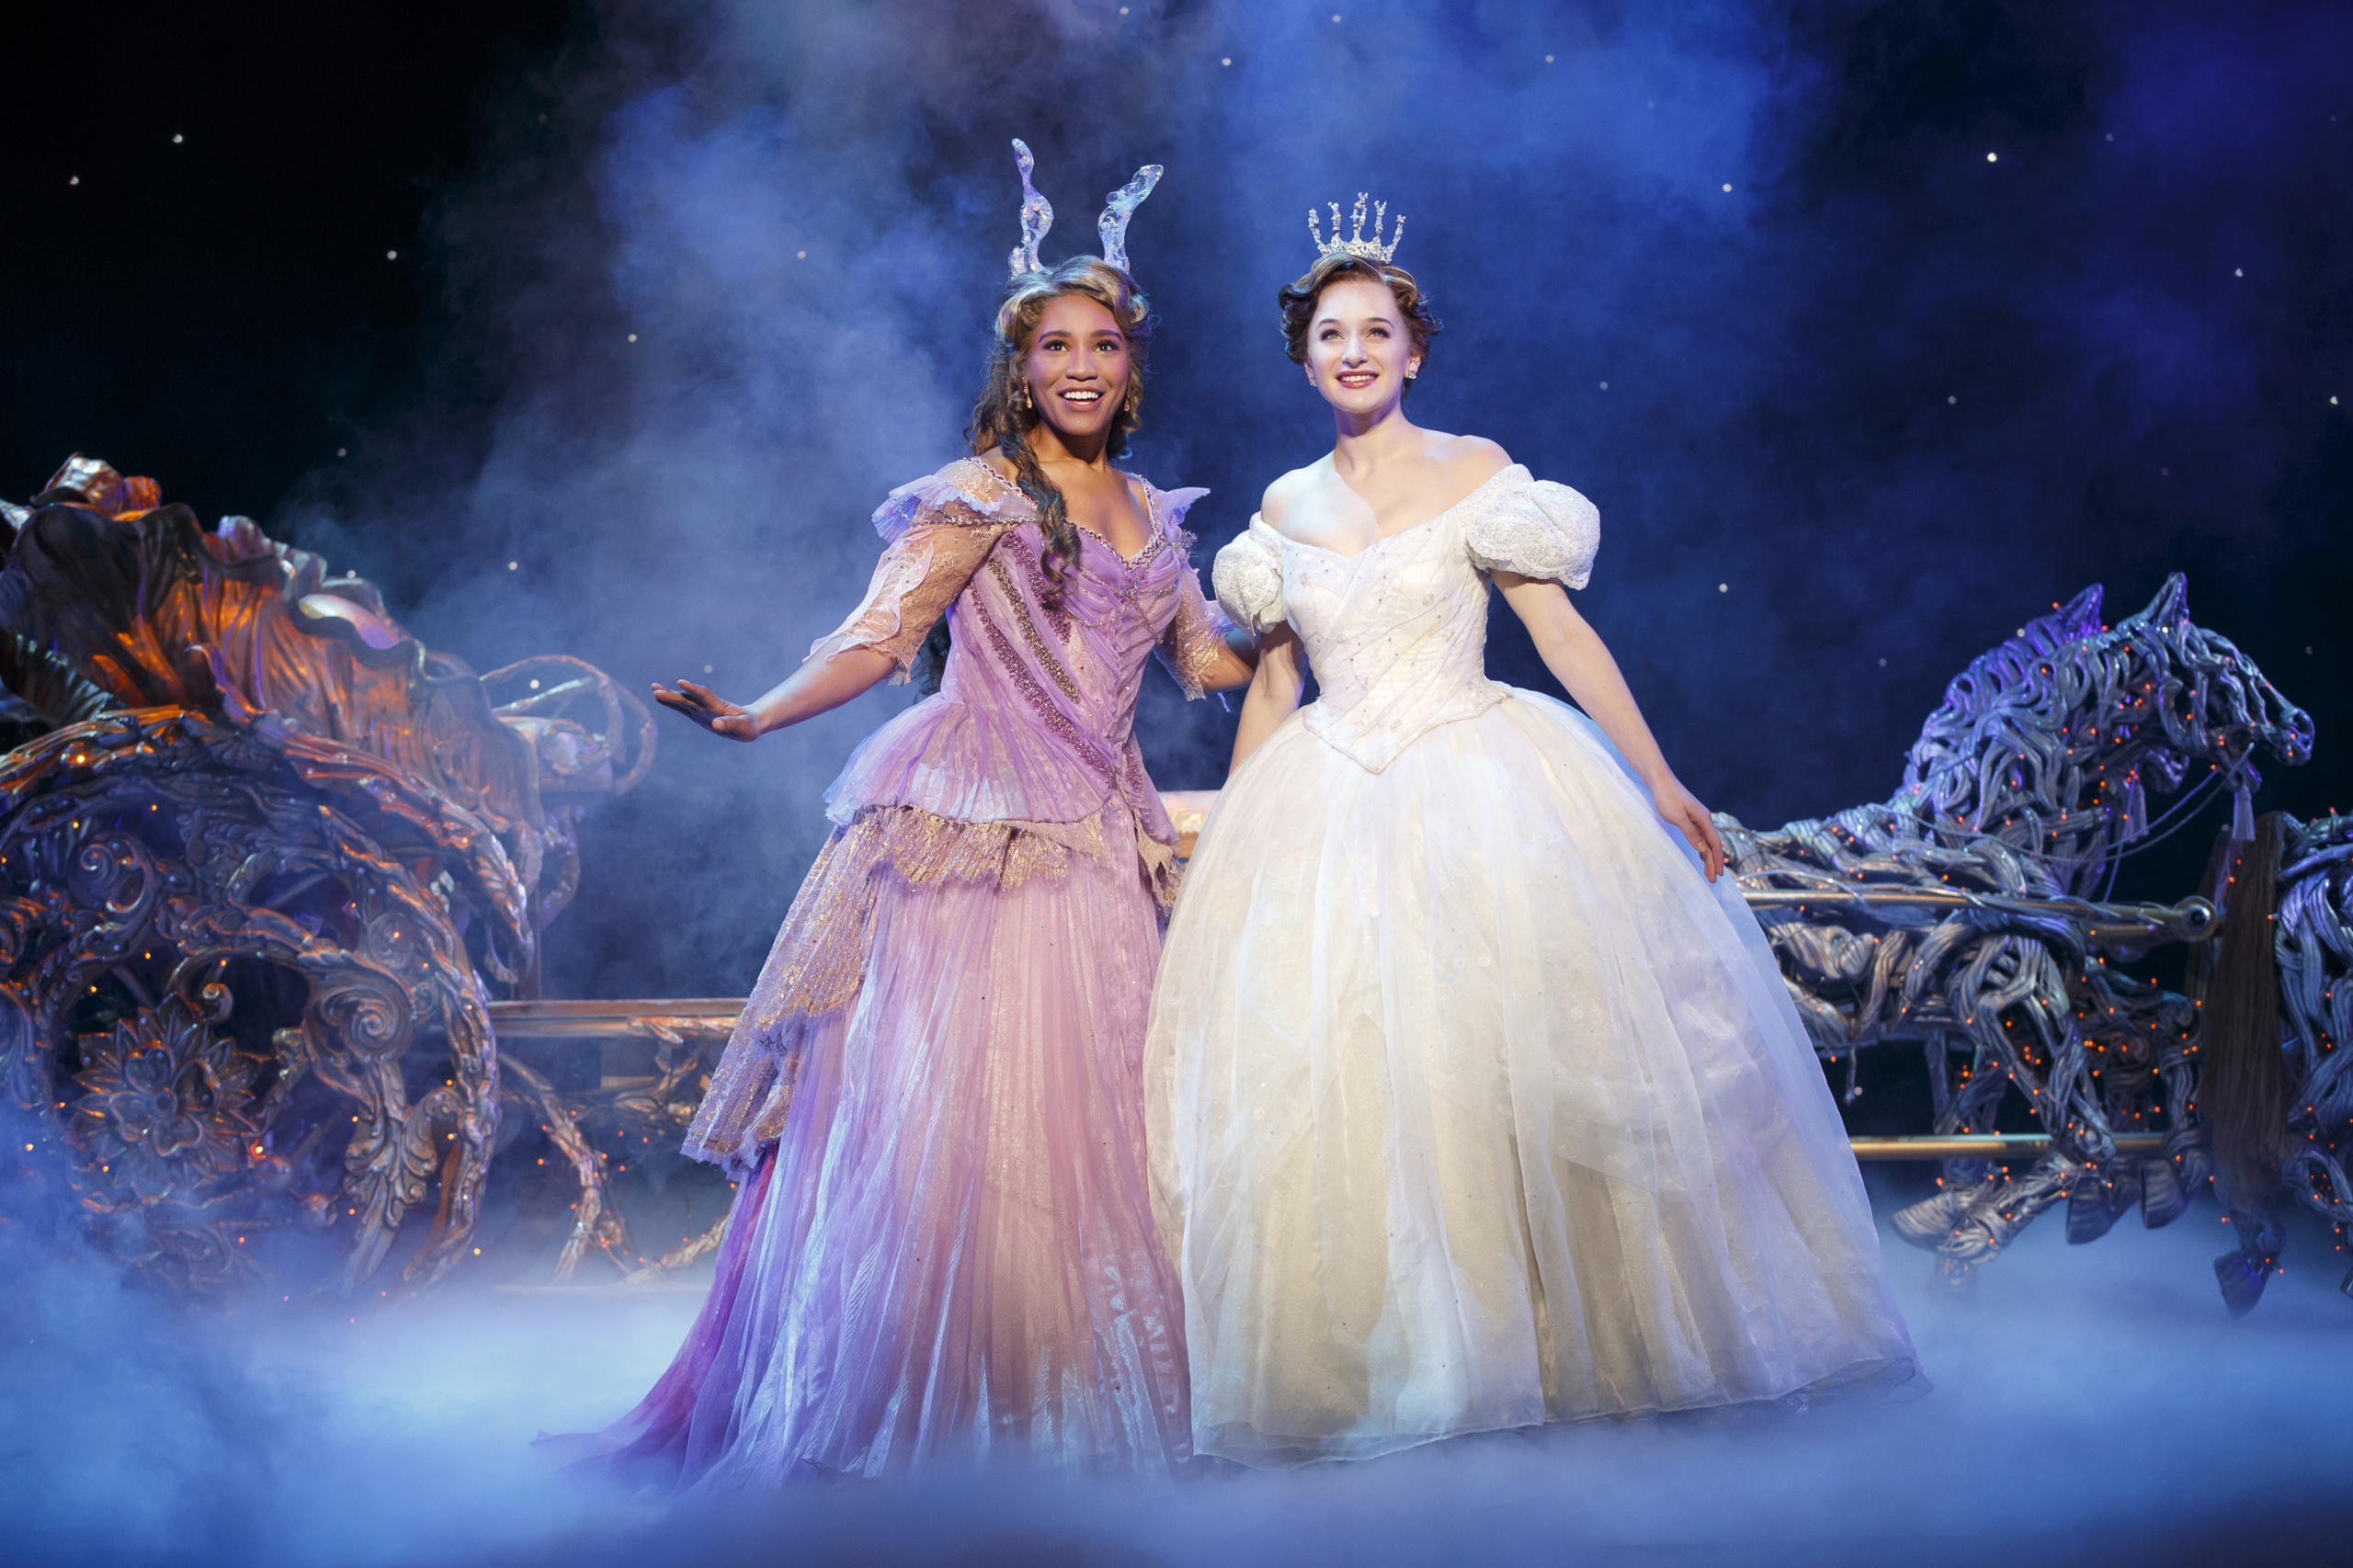 Cinderella am. Золушка Бродвей. Cinderella Musical Broadway. Rodgers and Hammerstein's Cinderella. Золушка.